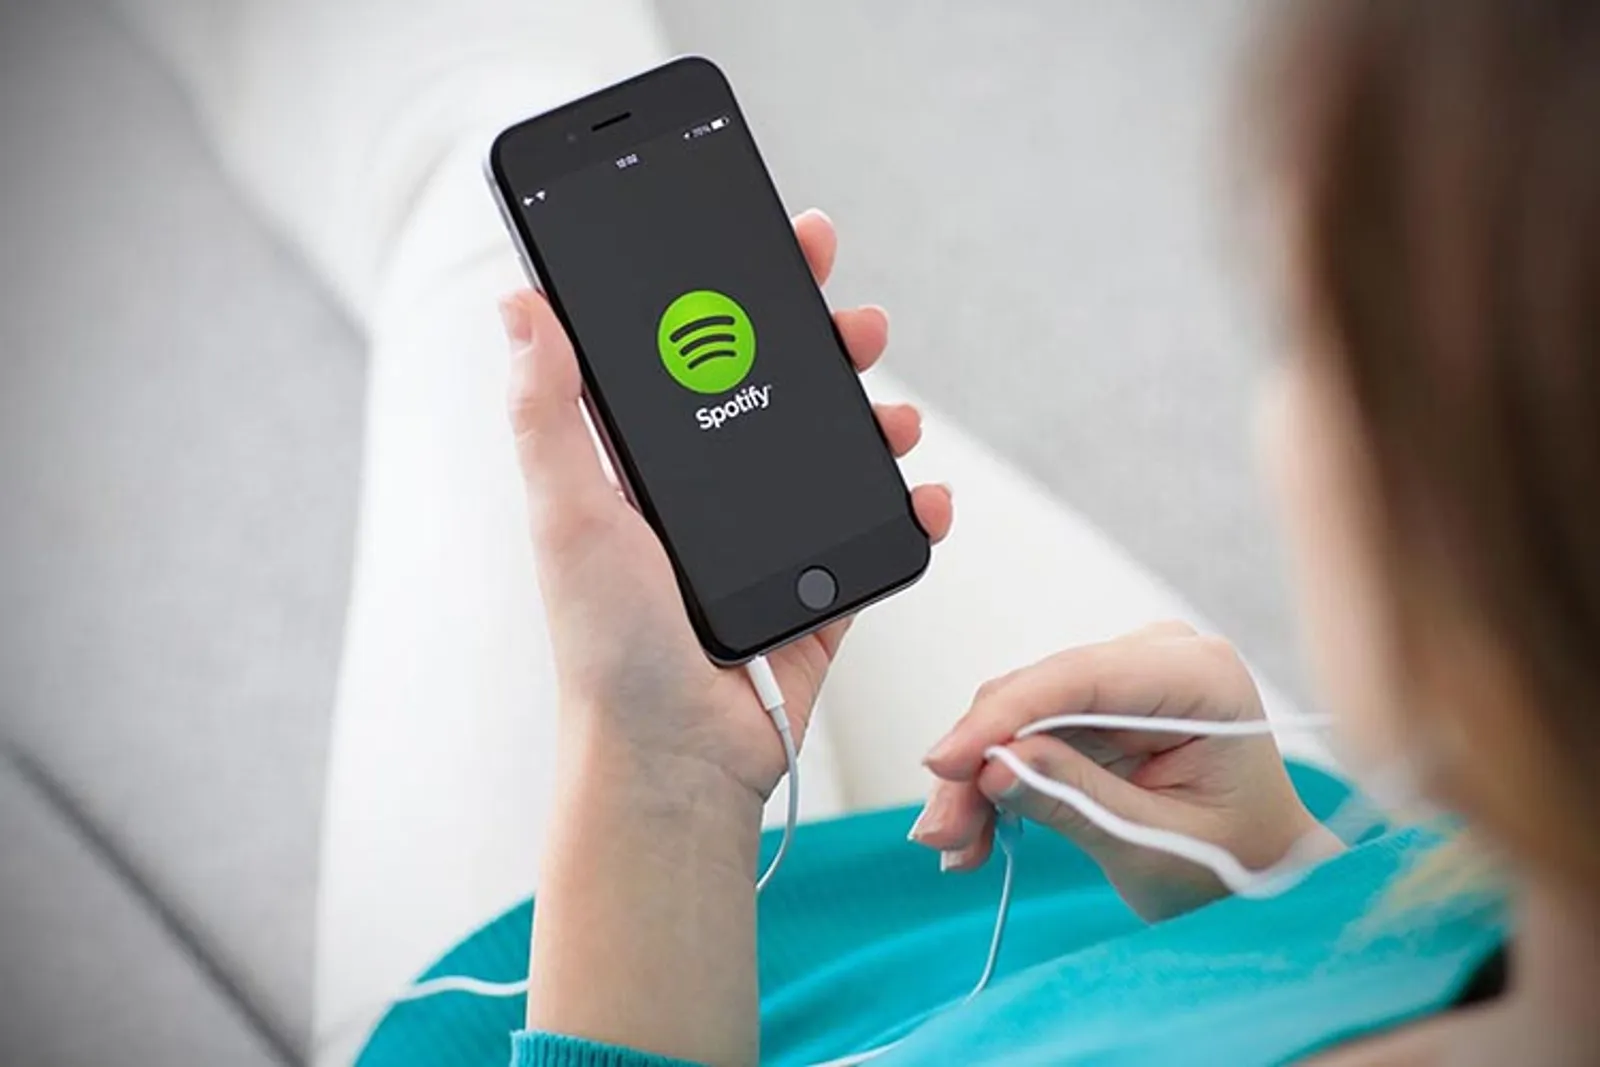 Penuh Kode, Cewek Ini Minta Putus Lewat Playlist Lagu Spotify